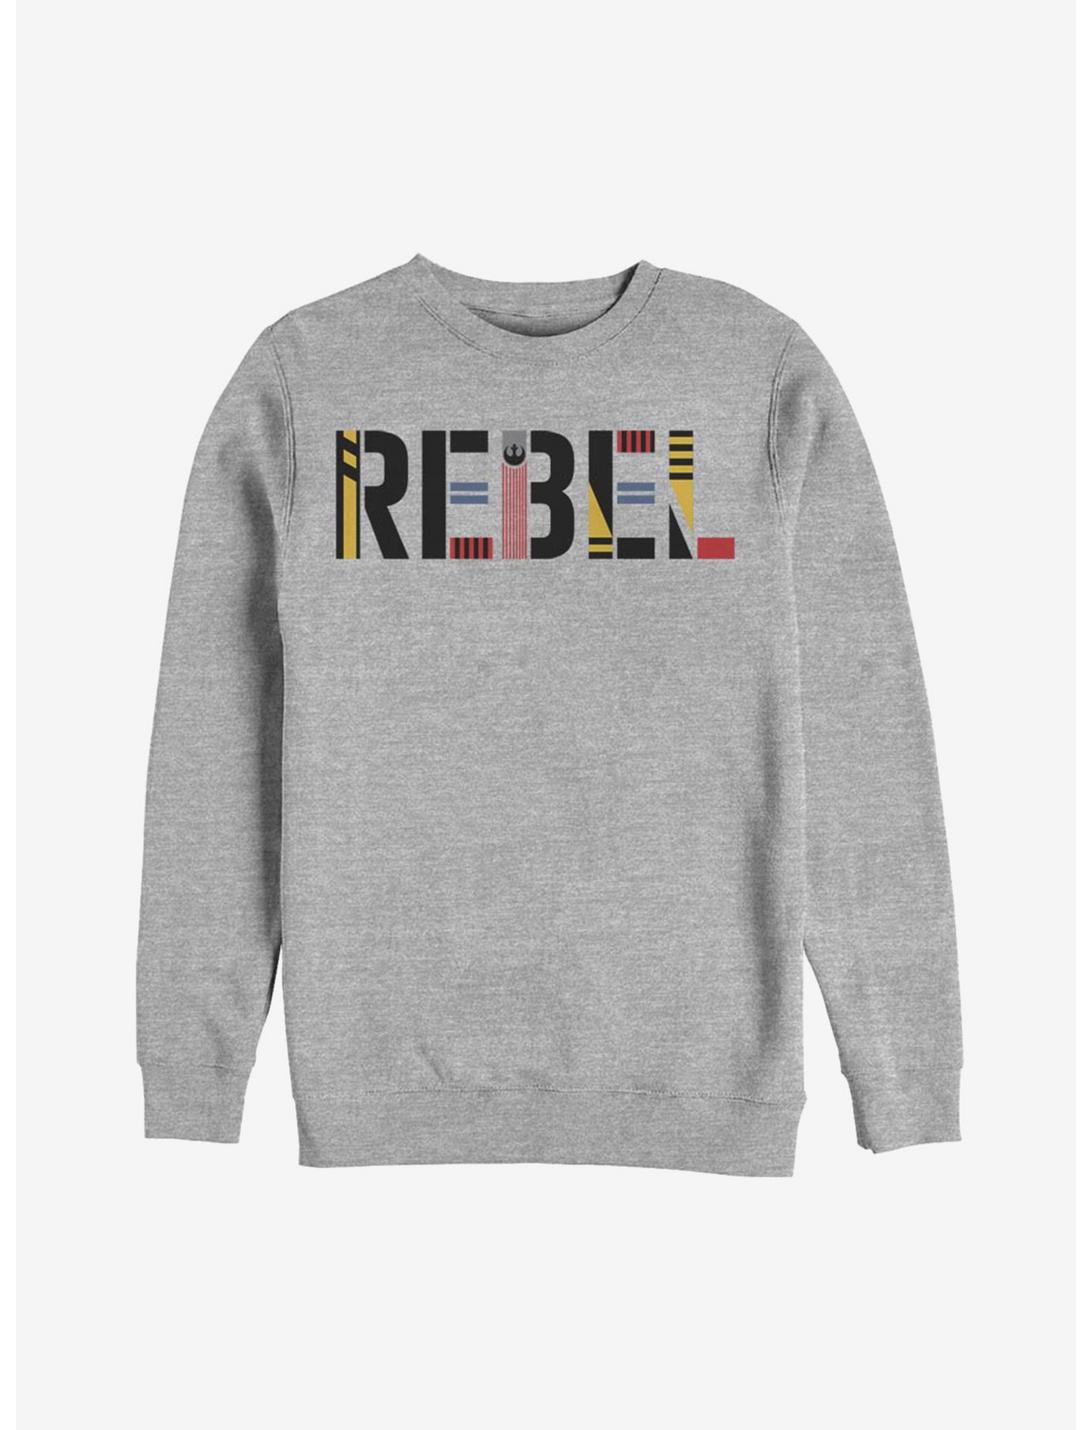 Star Wars Episode IX The Rise Of Skywalker Rebel Simple Sweatshirt, ATH HTR, hi-res